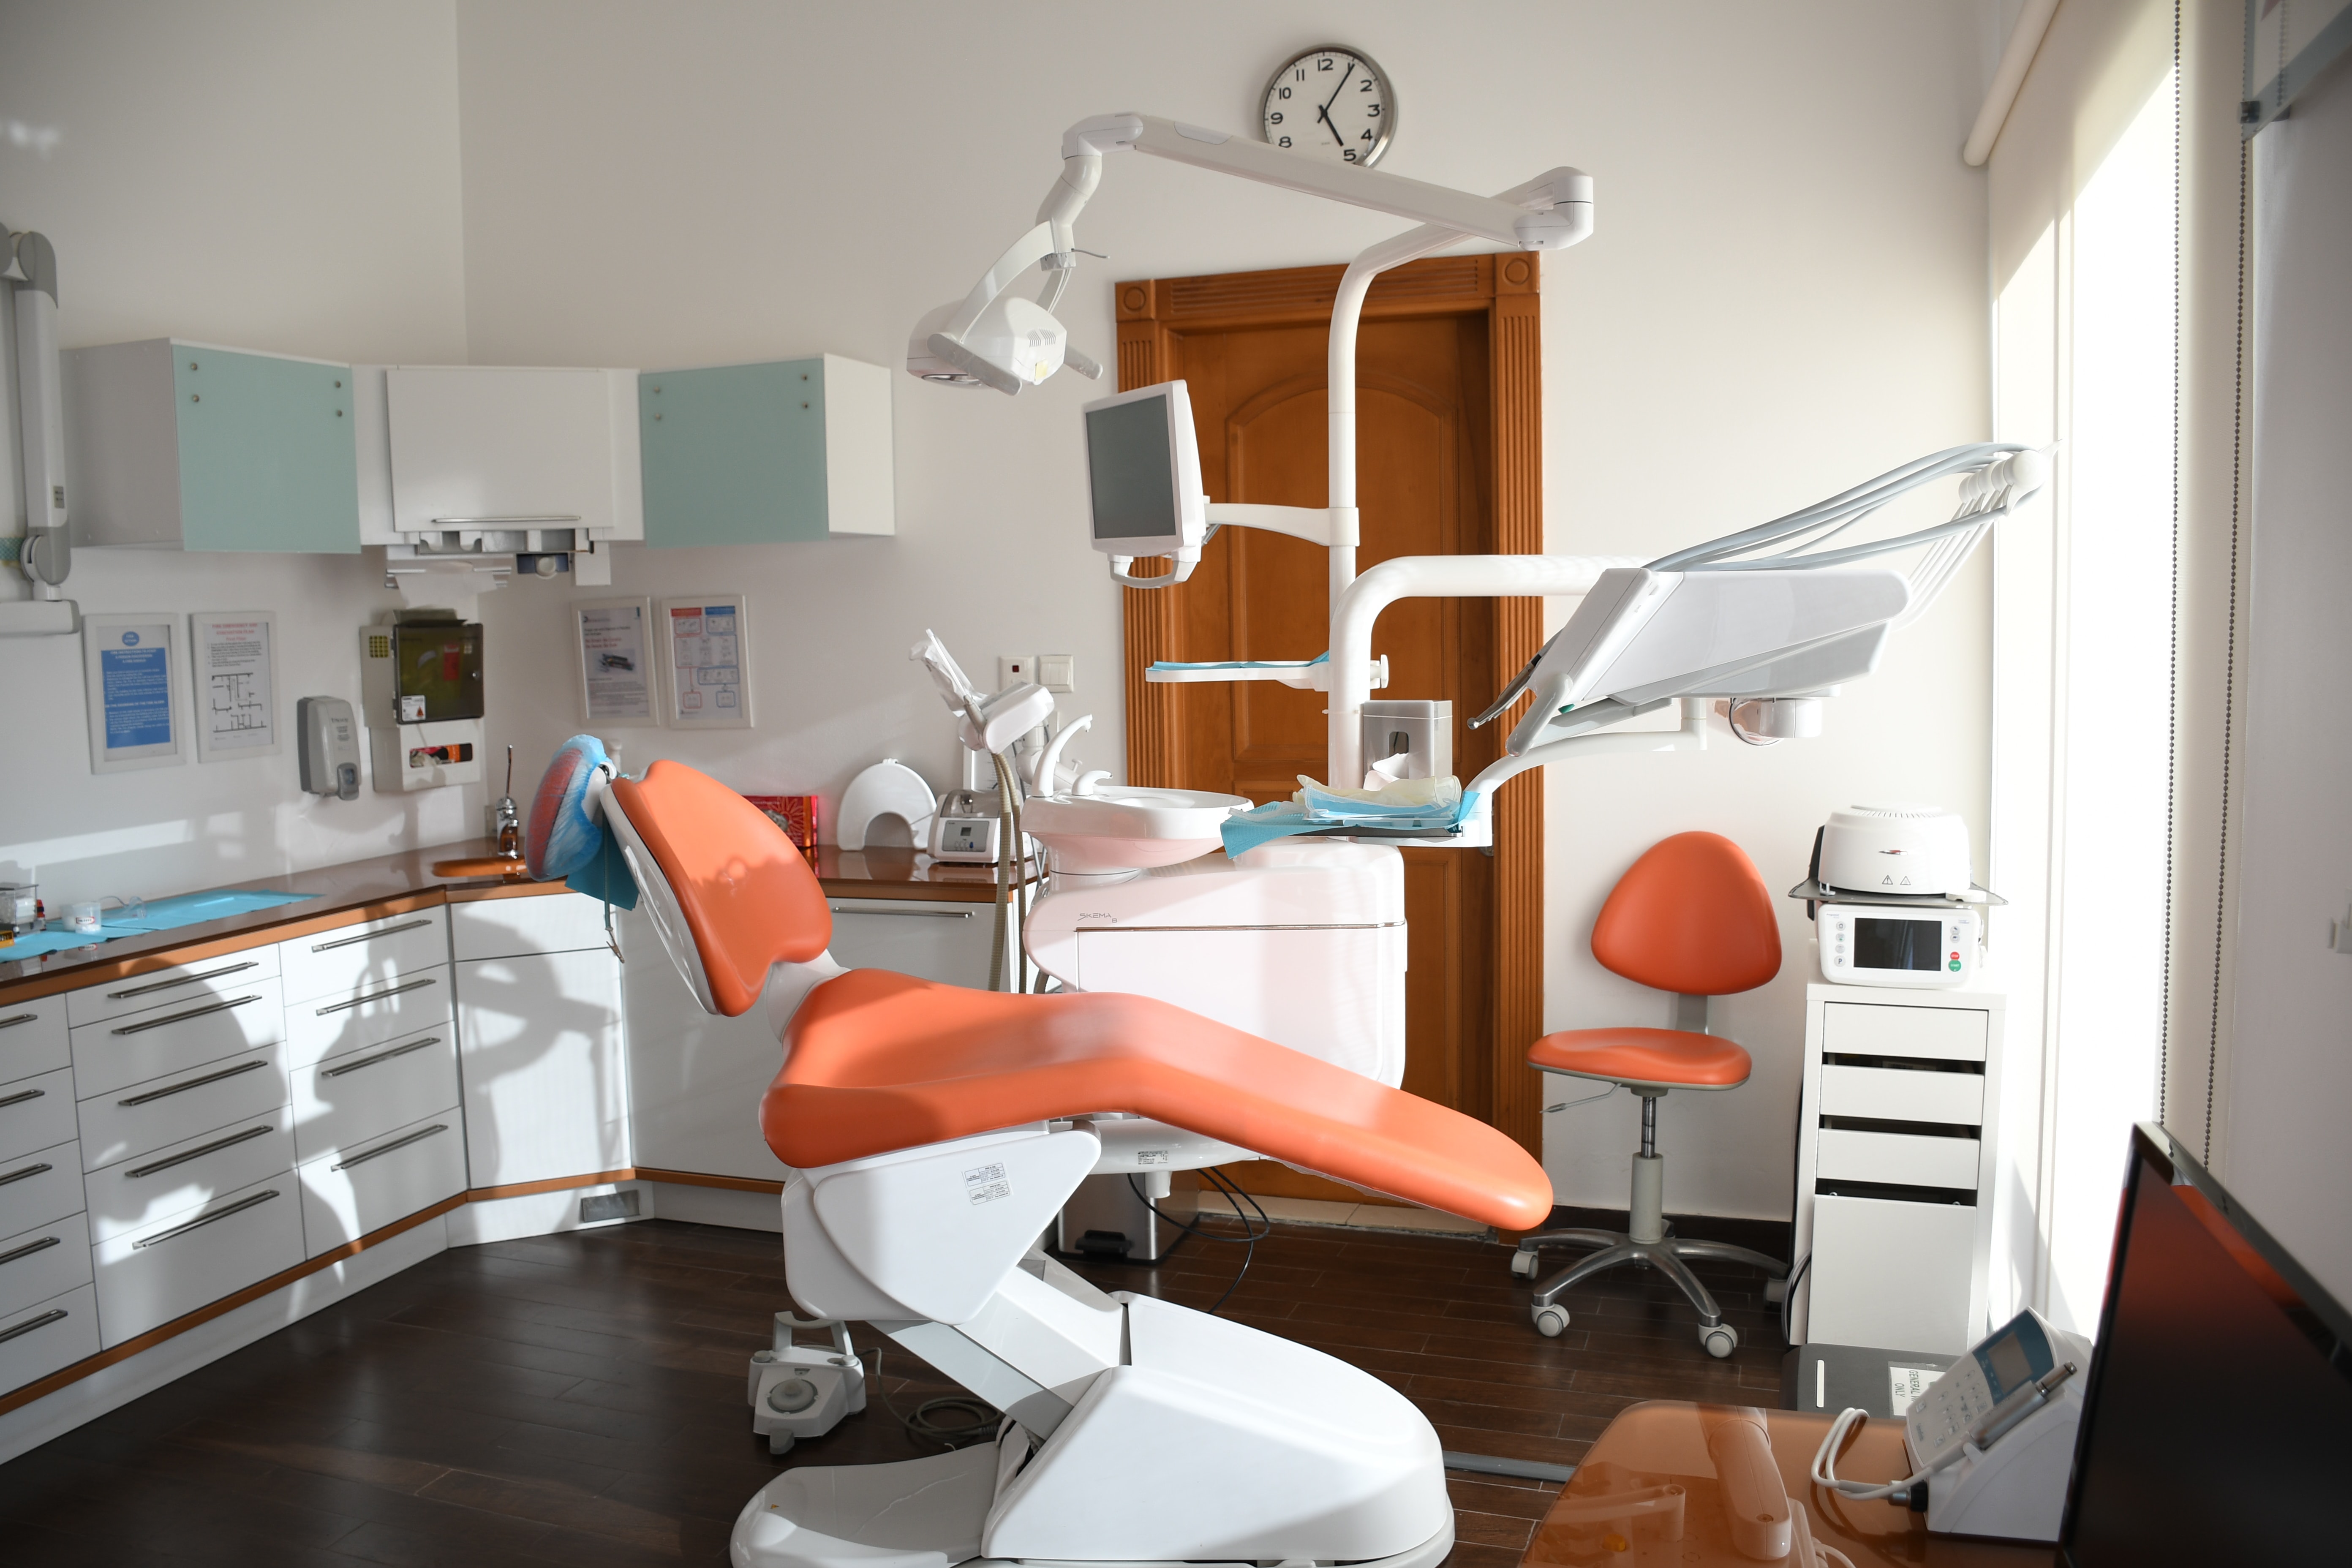 Reclined orange dentist chair in a dental office.